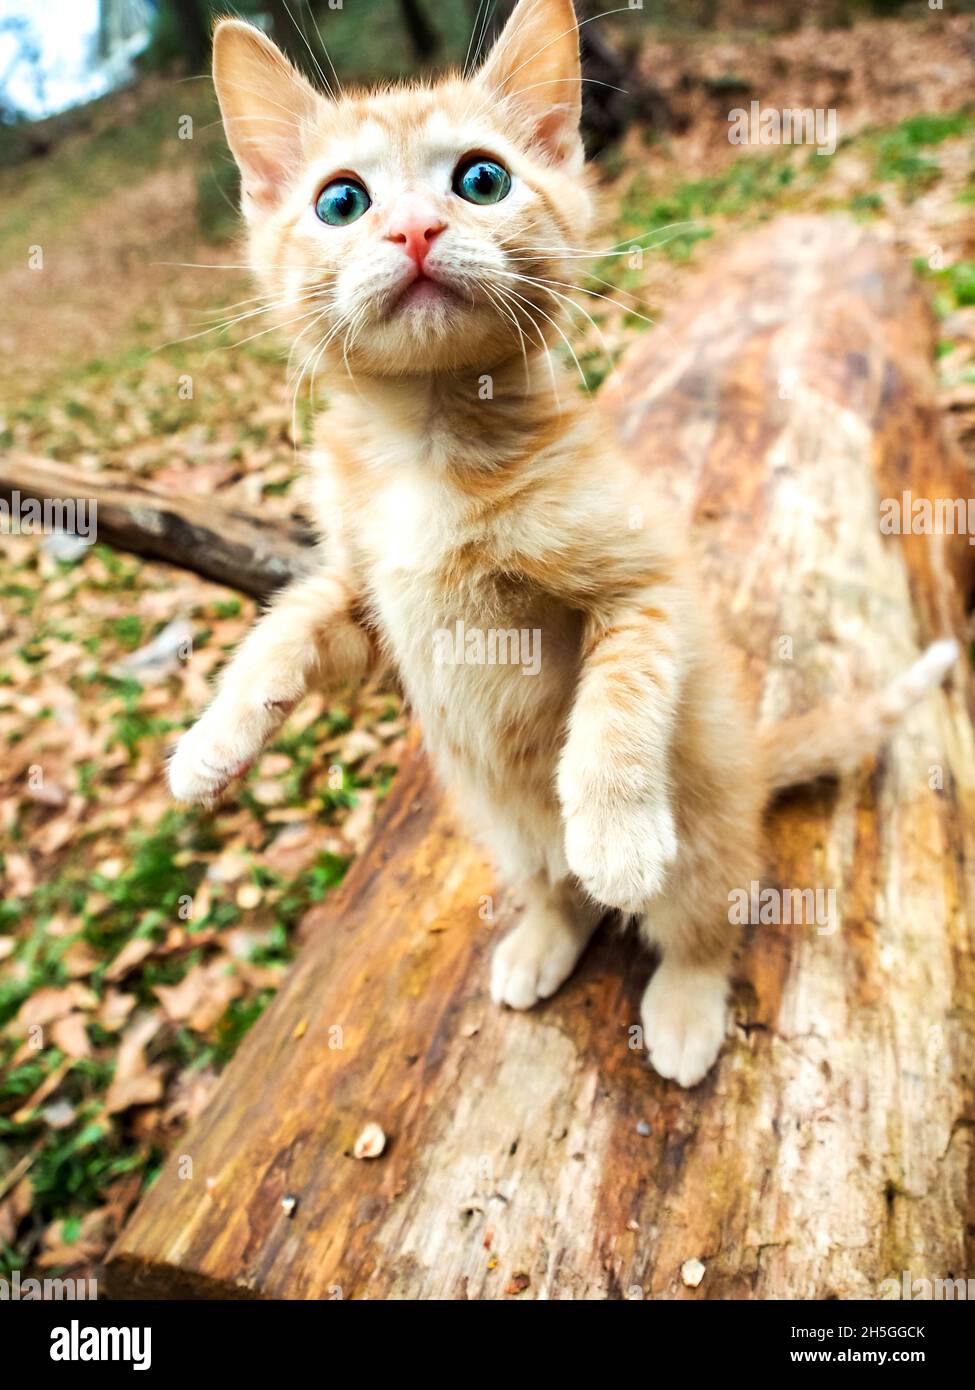 Kitten standing up on log, big round eyes, outdoors Stock Photo